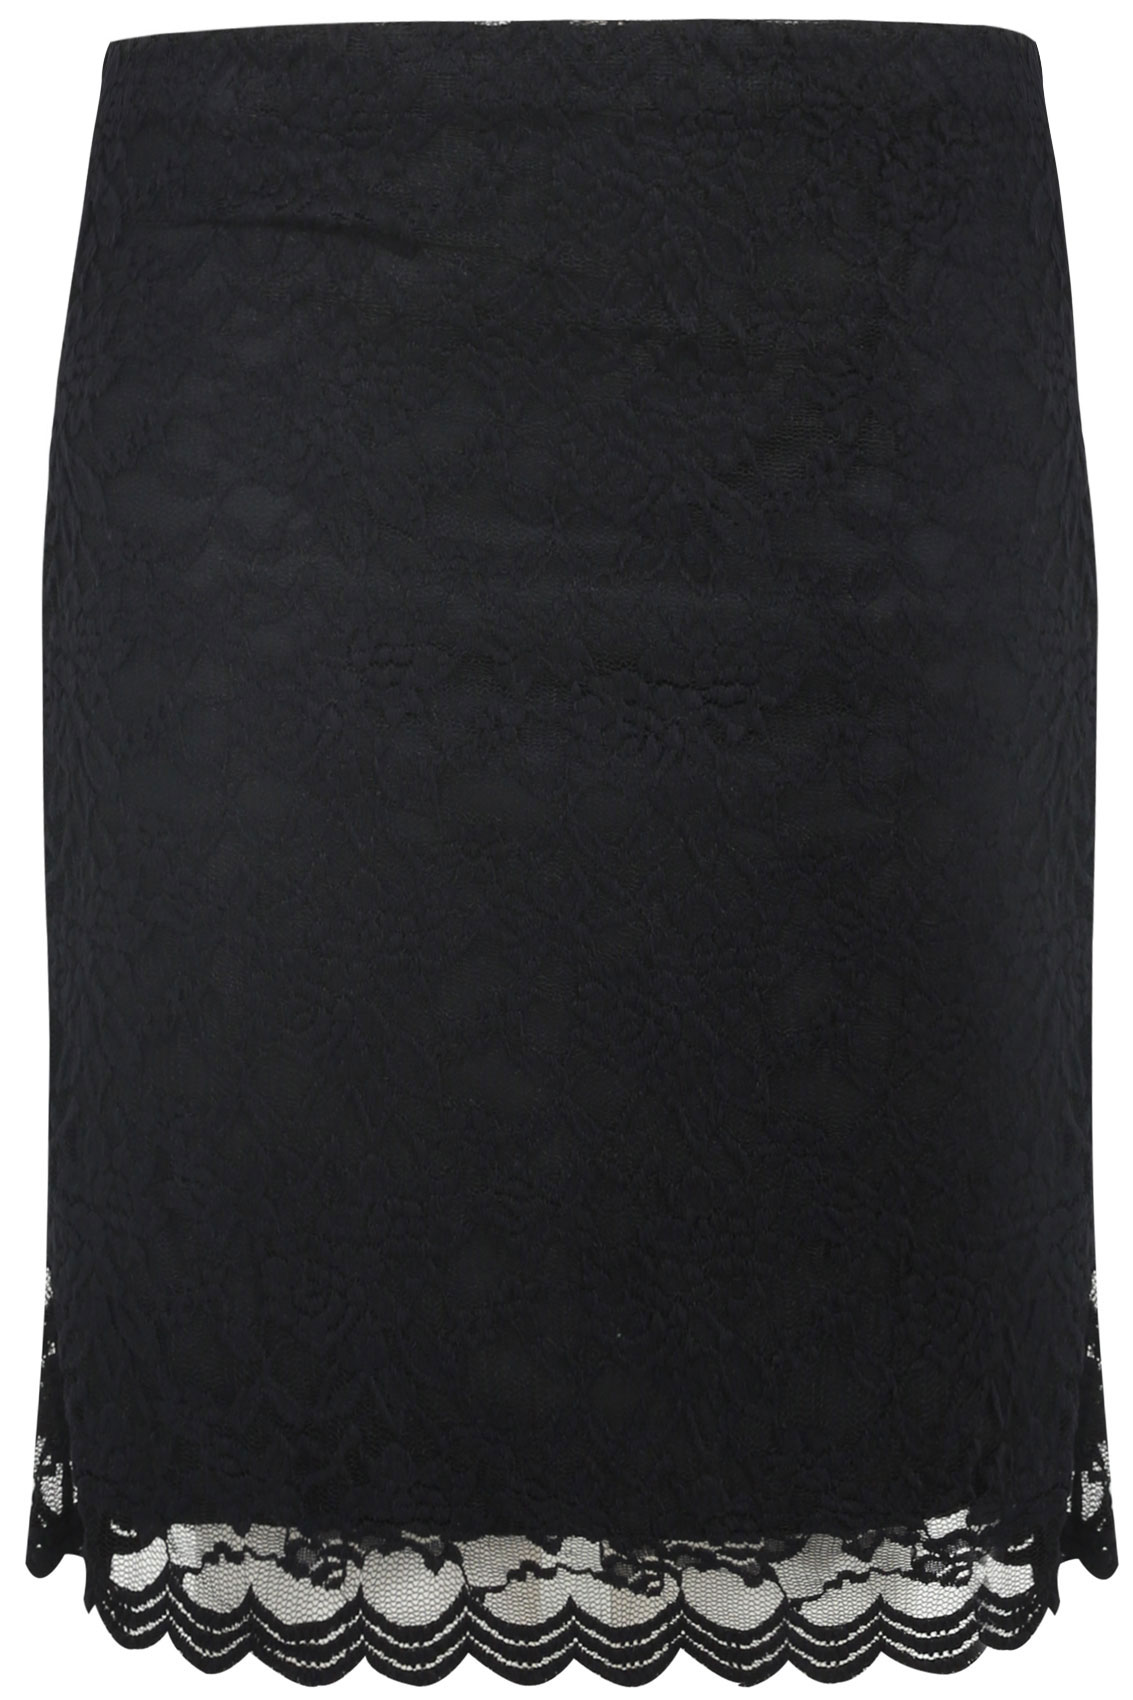 Black Lace Mini Skirt With Elasticated Waist Plus size 14,16,18,20,22 ...